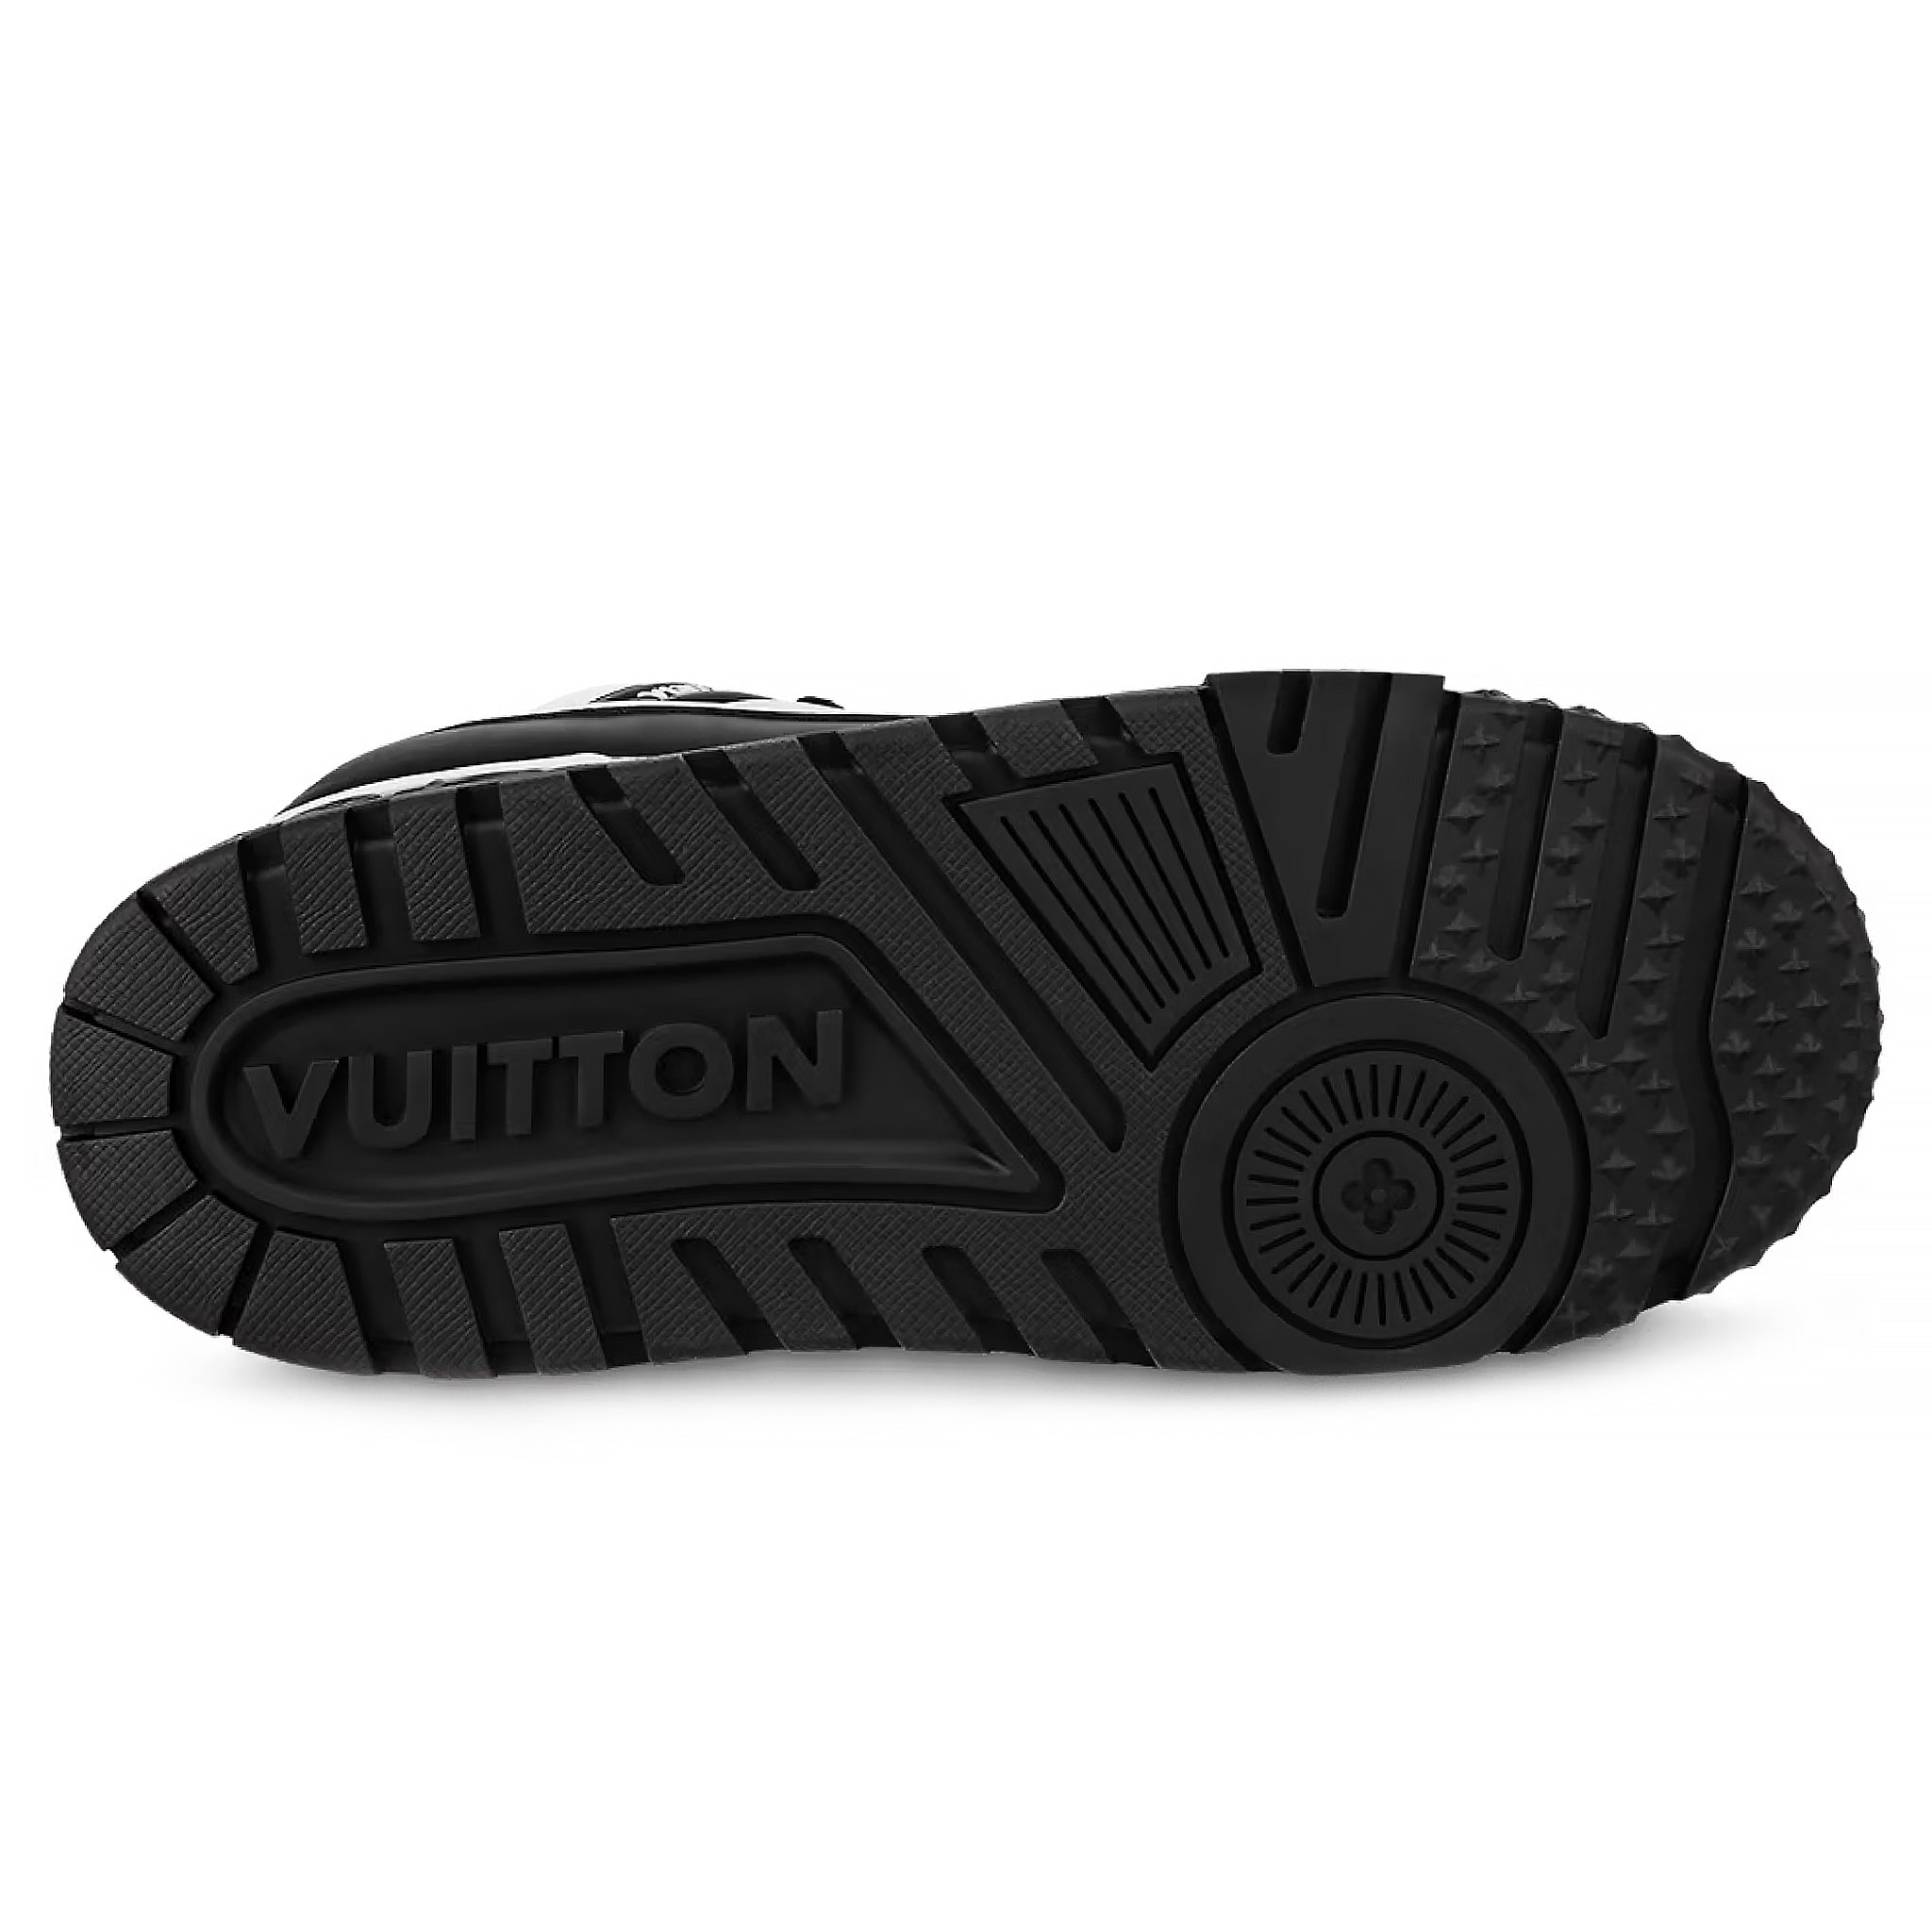 Sole view of Louis Vuitton LV Maxi Trainer Black Sneaker 1ABZQ6